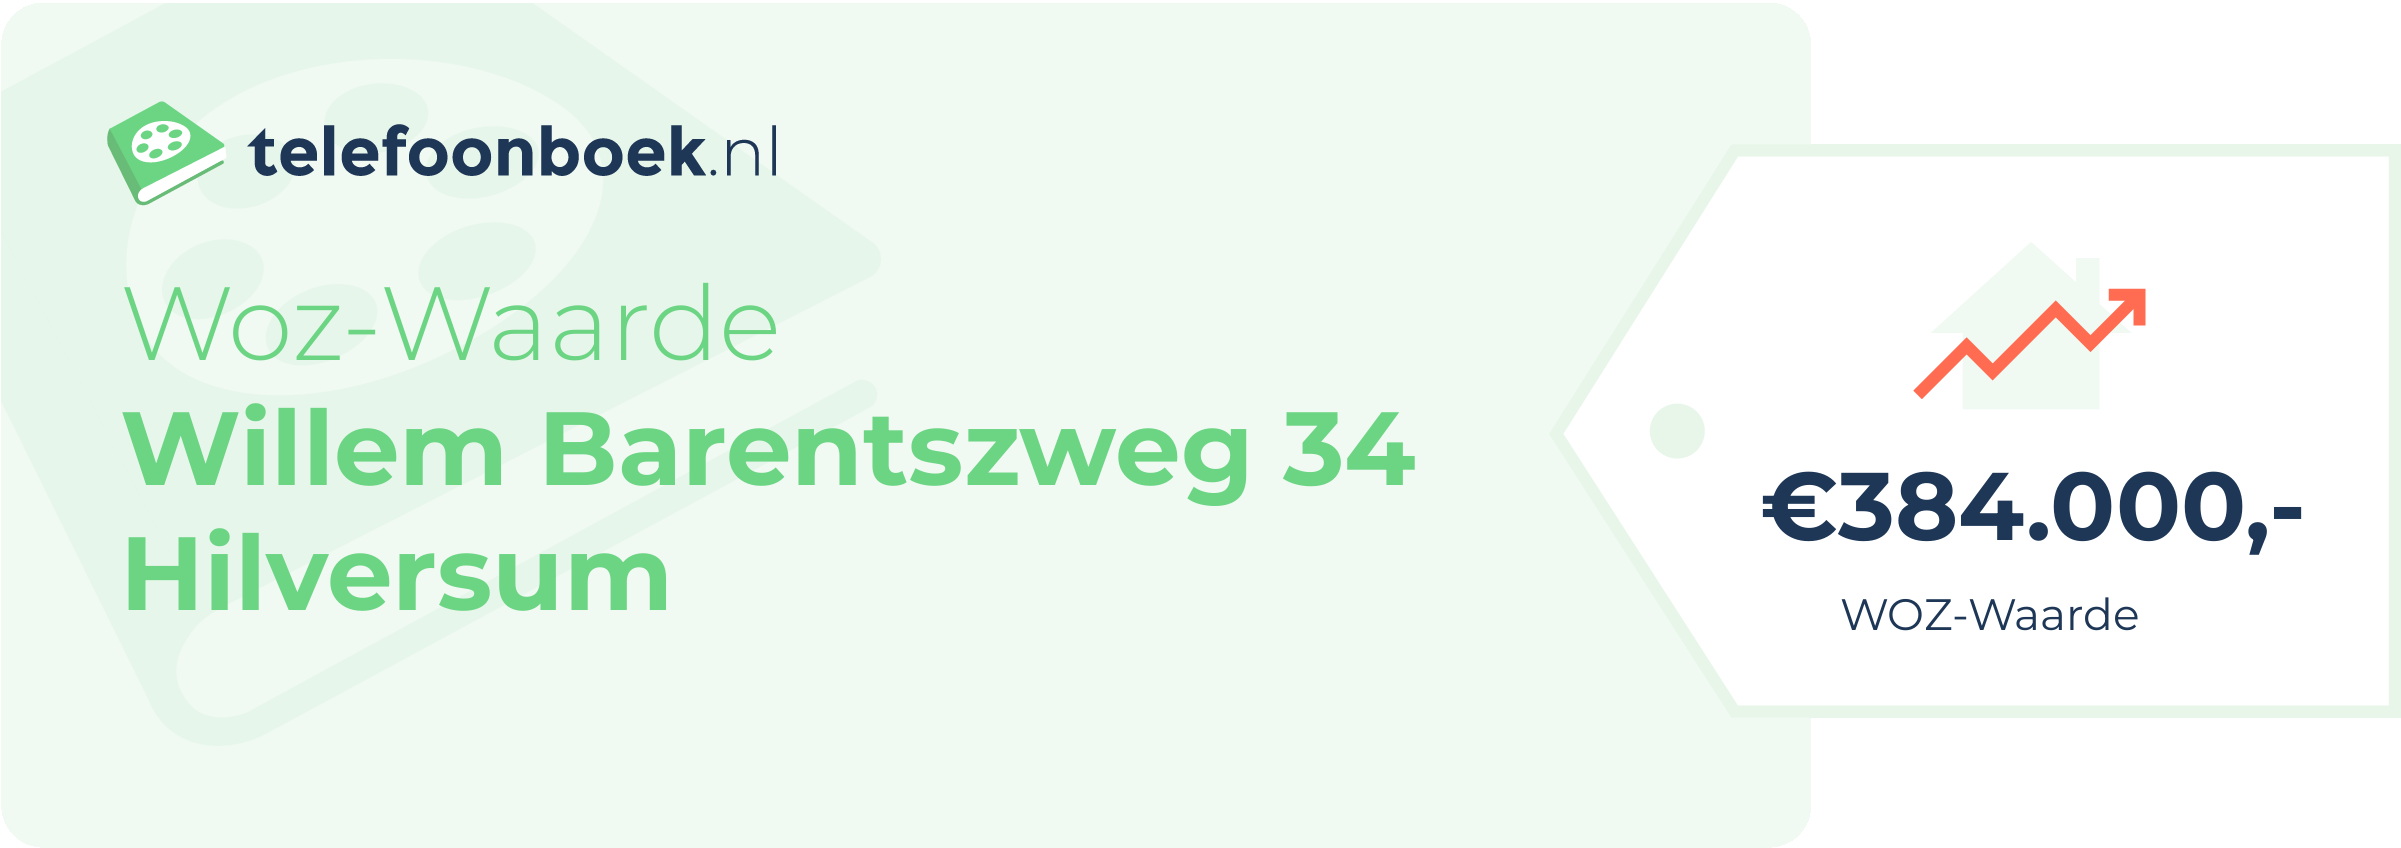 WOZ-waarde Willem Barentszweg 34 Hilversum